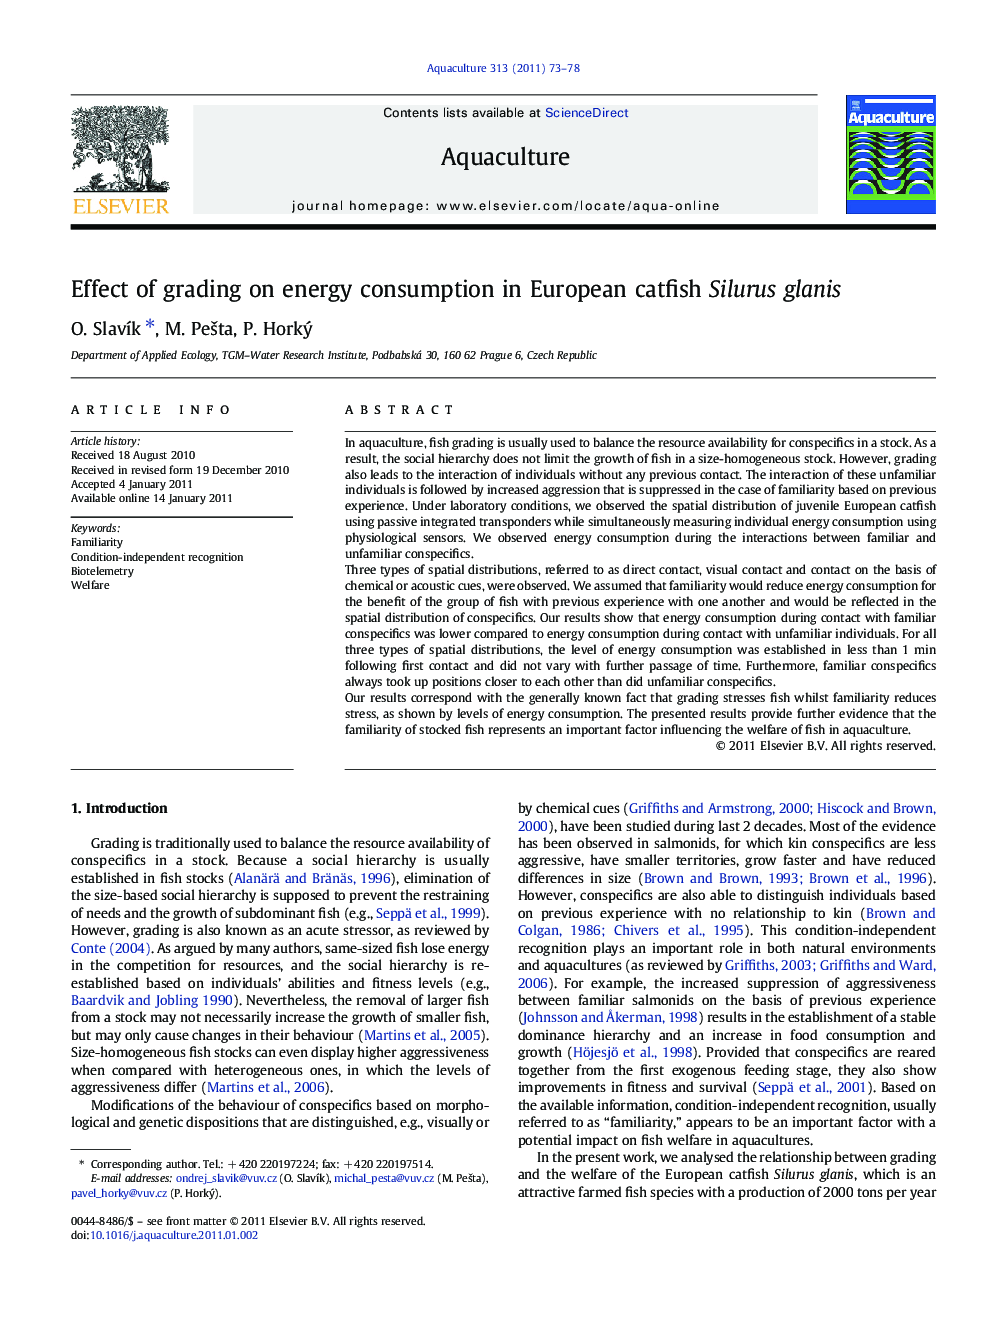 Effect of grading on energy consumption in European catfish Silurus glanis